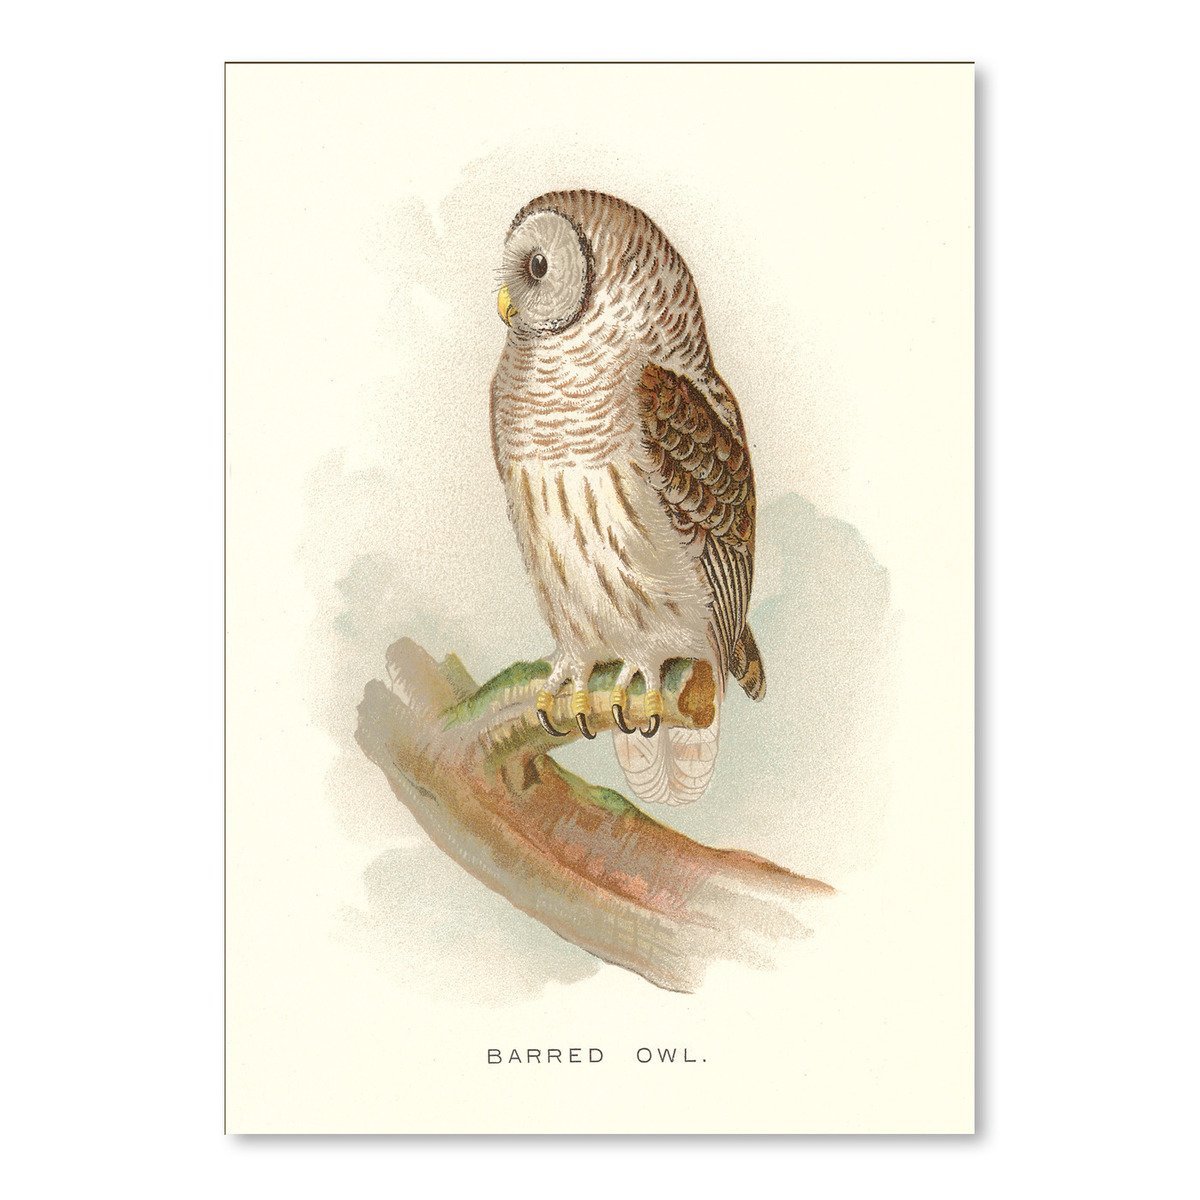 Barred Owl by Found Image Press Art Print - Art Print - Americanflat